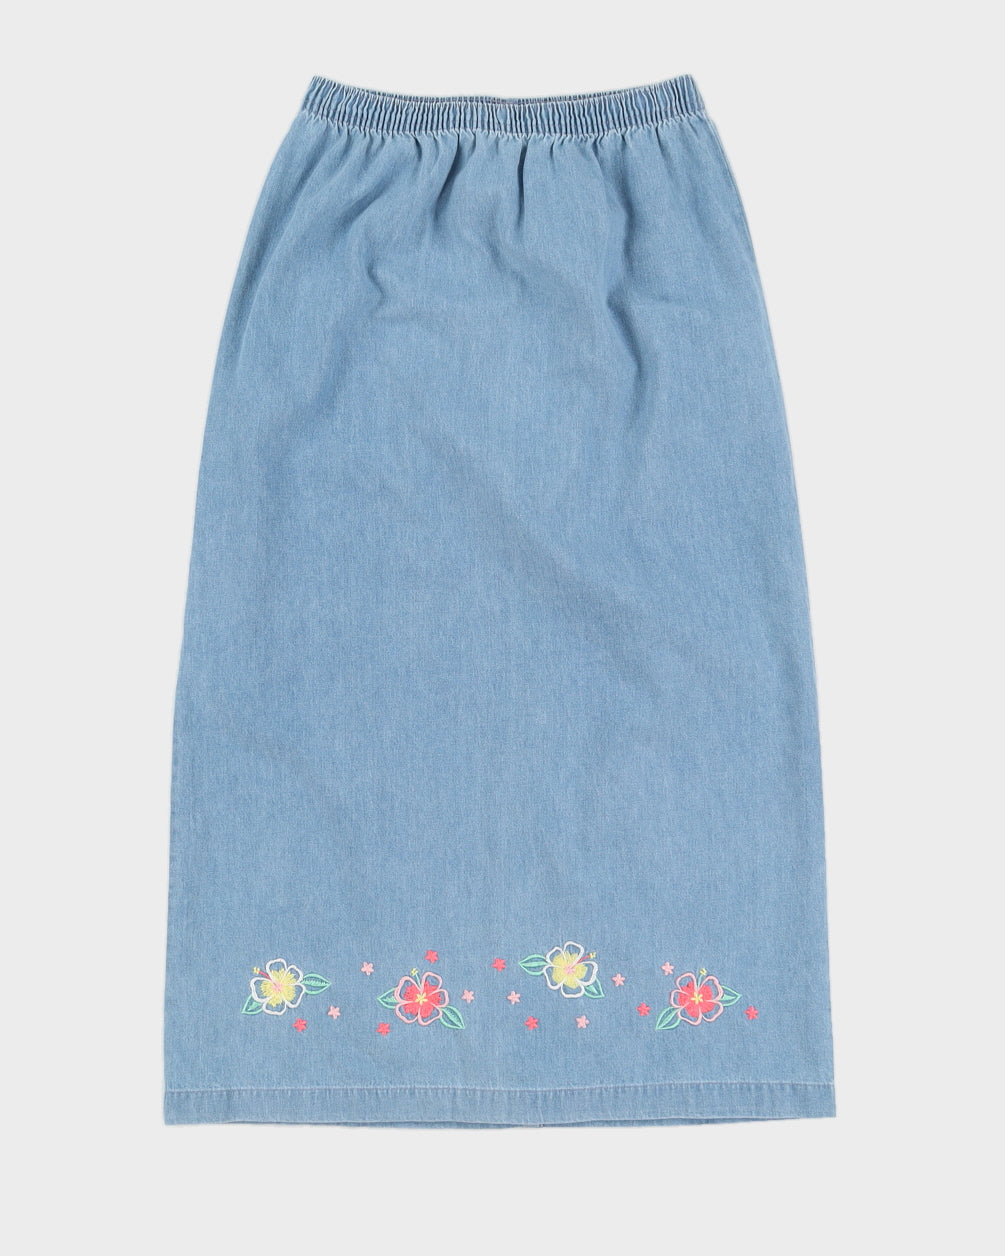 Vintage 90s Alia Sport Denim Midi Skirt With Floral Embroidery - S